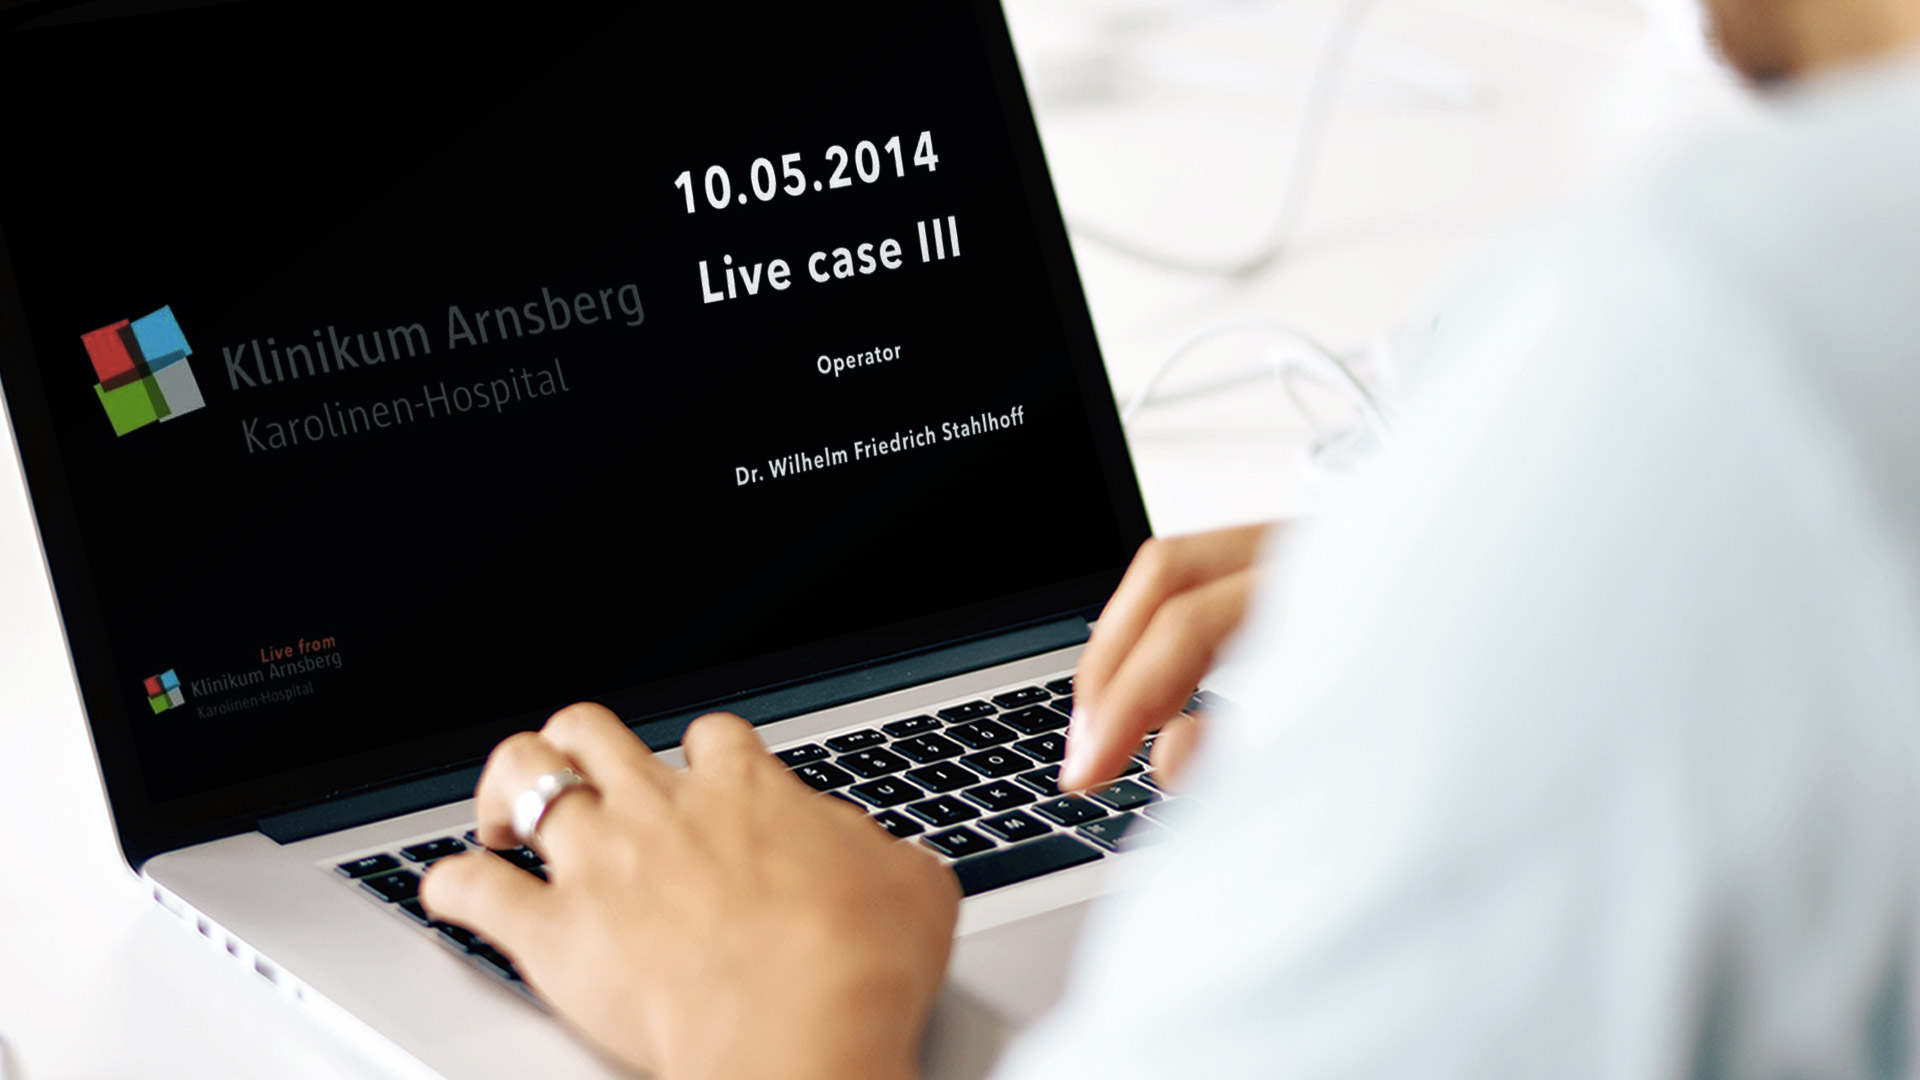 Klinikum Arnsberg congress 2014 - live case 2